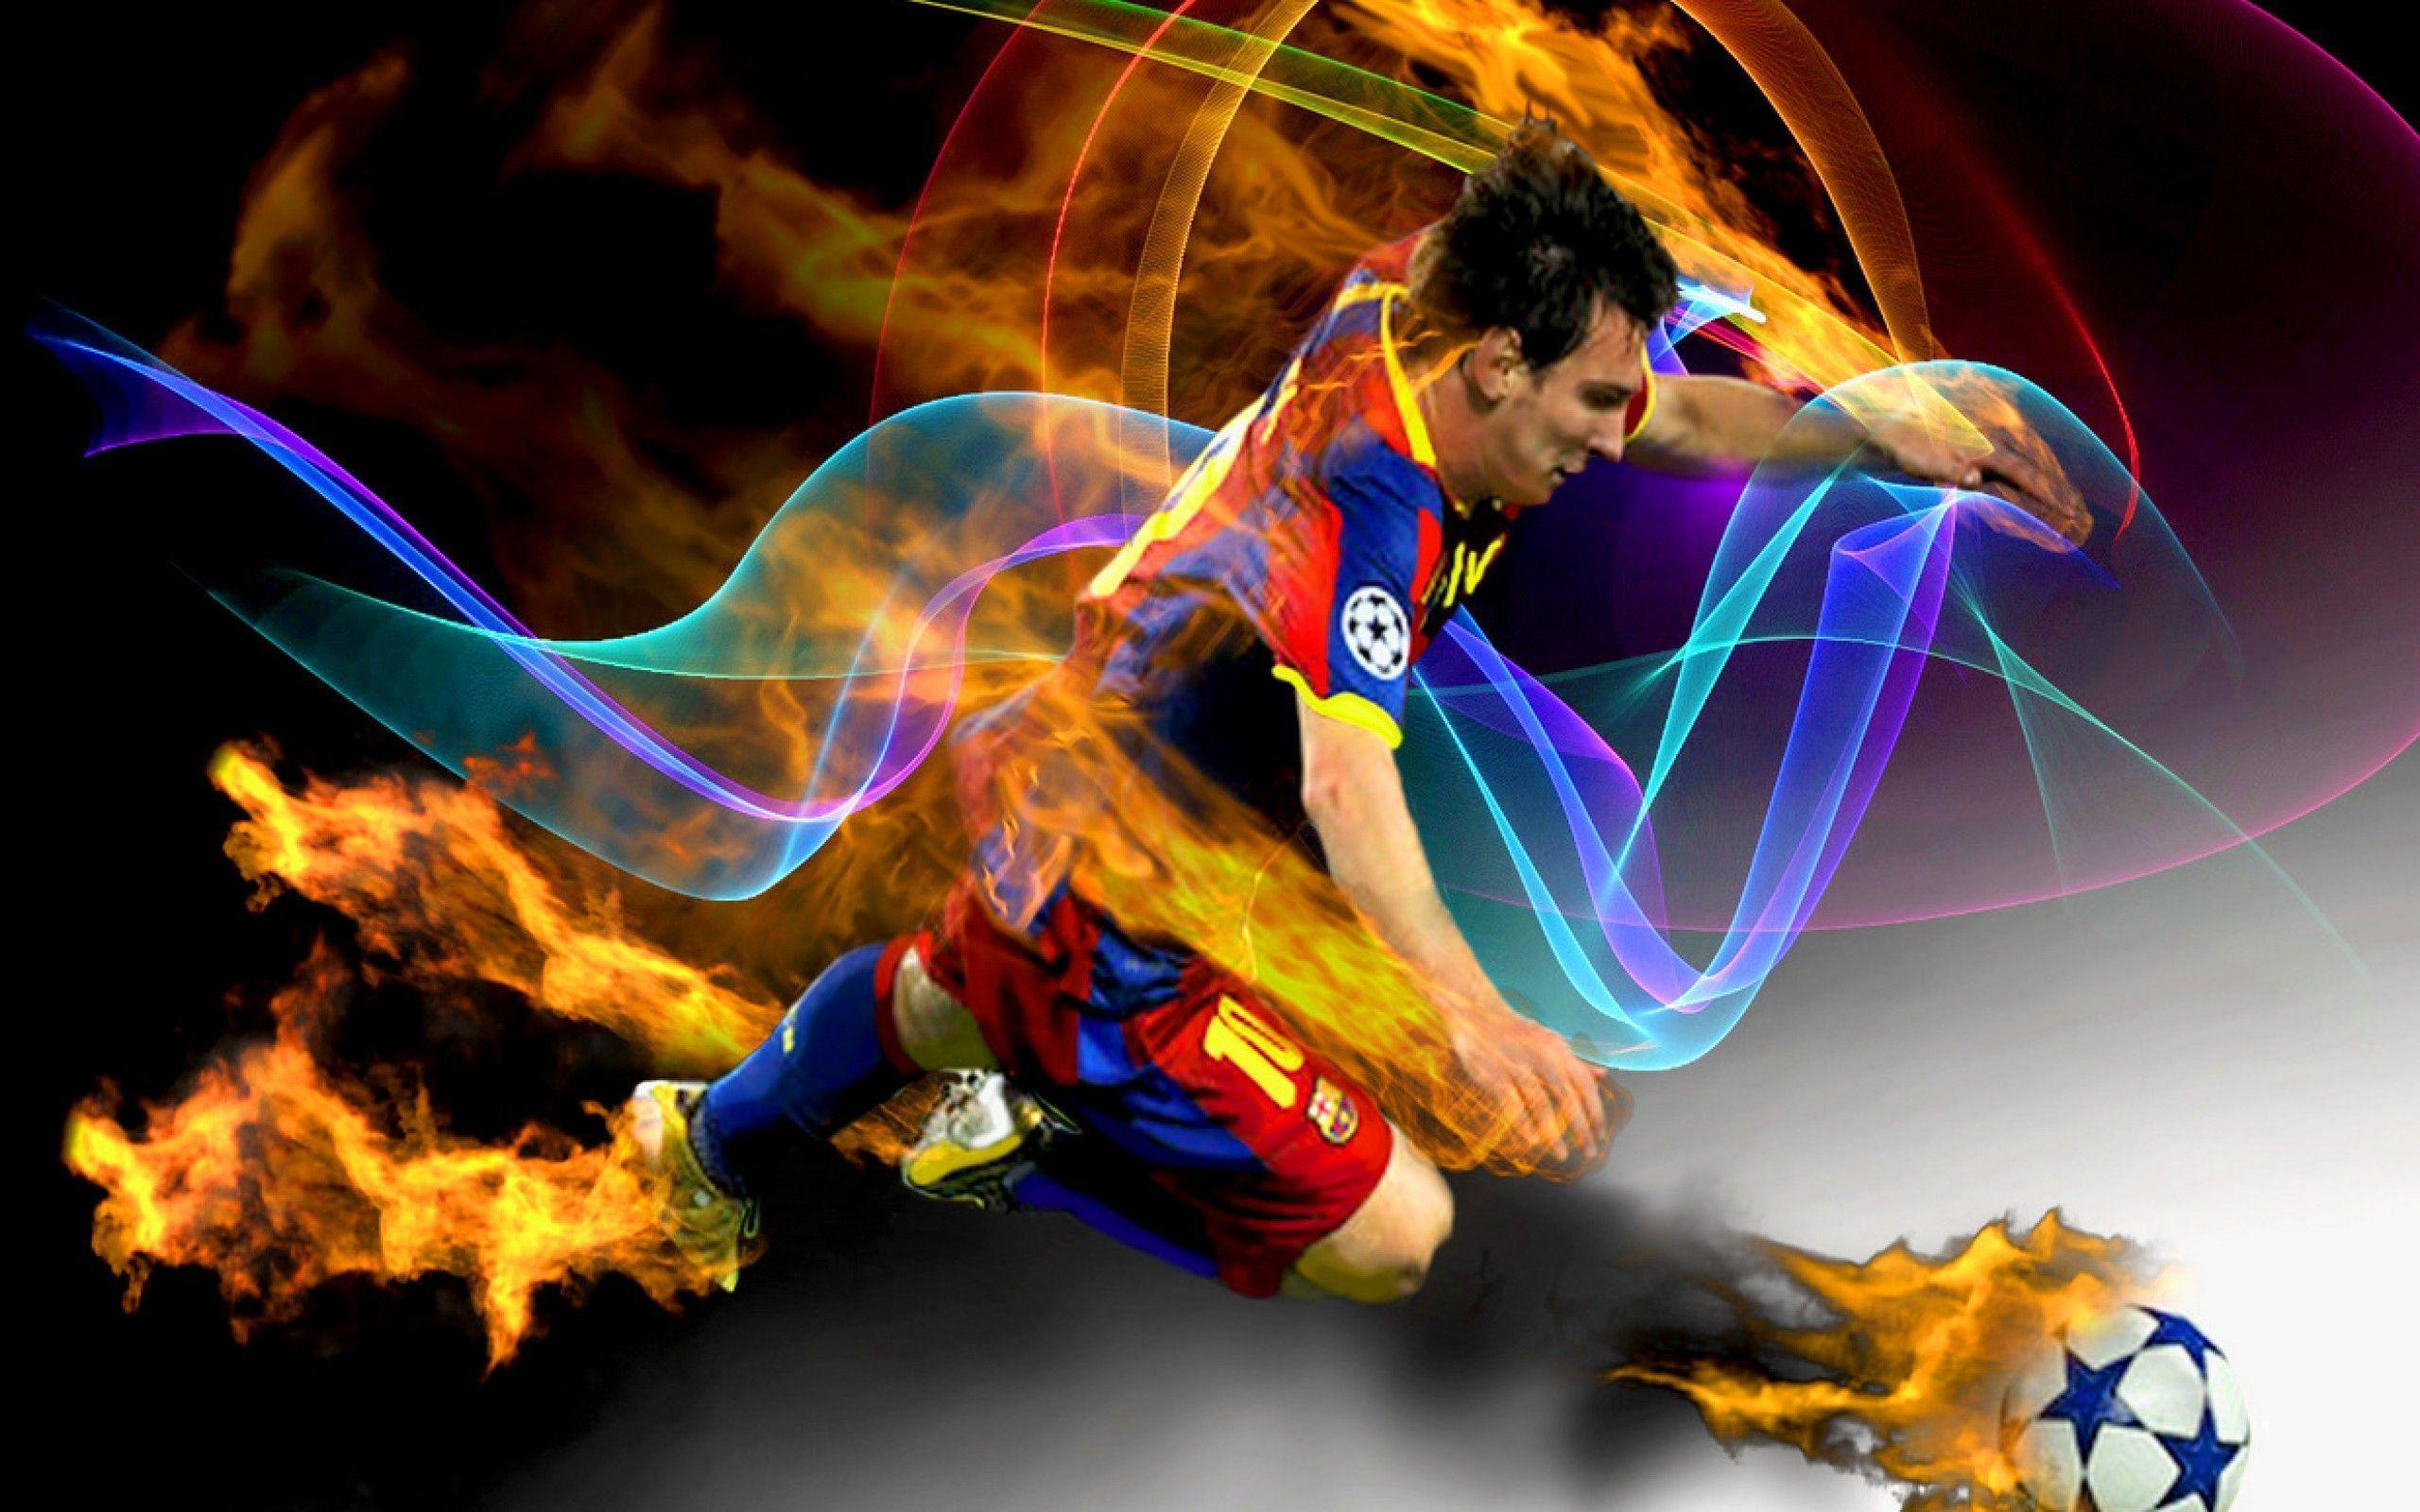 Messi Football Wallpaper HD. Wallpaper, Background, Image